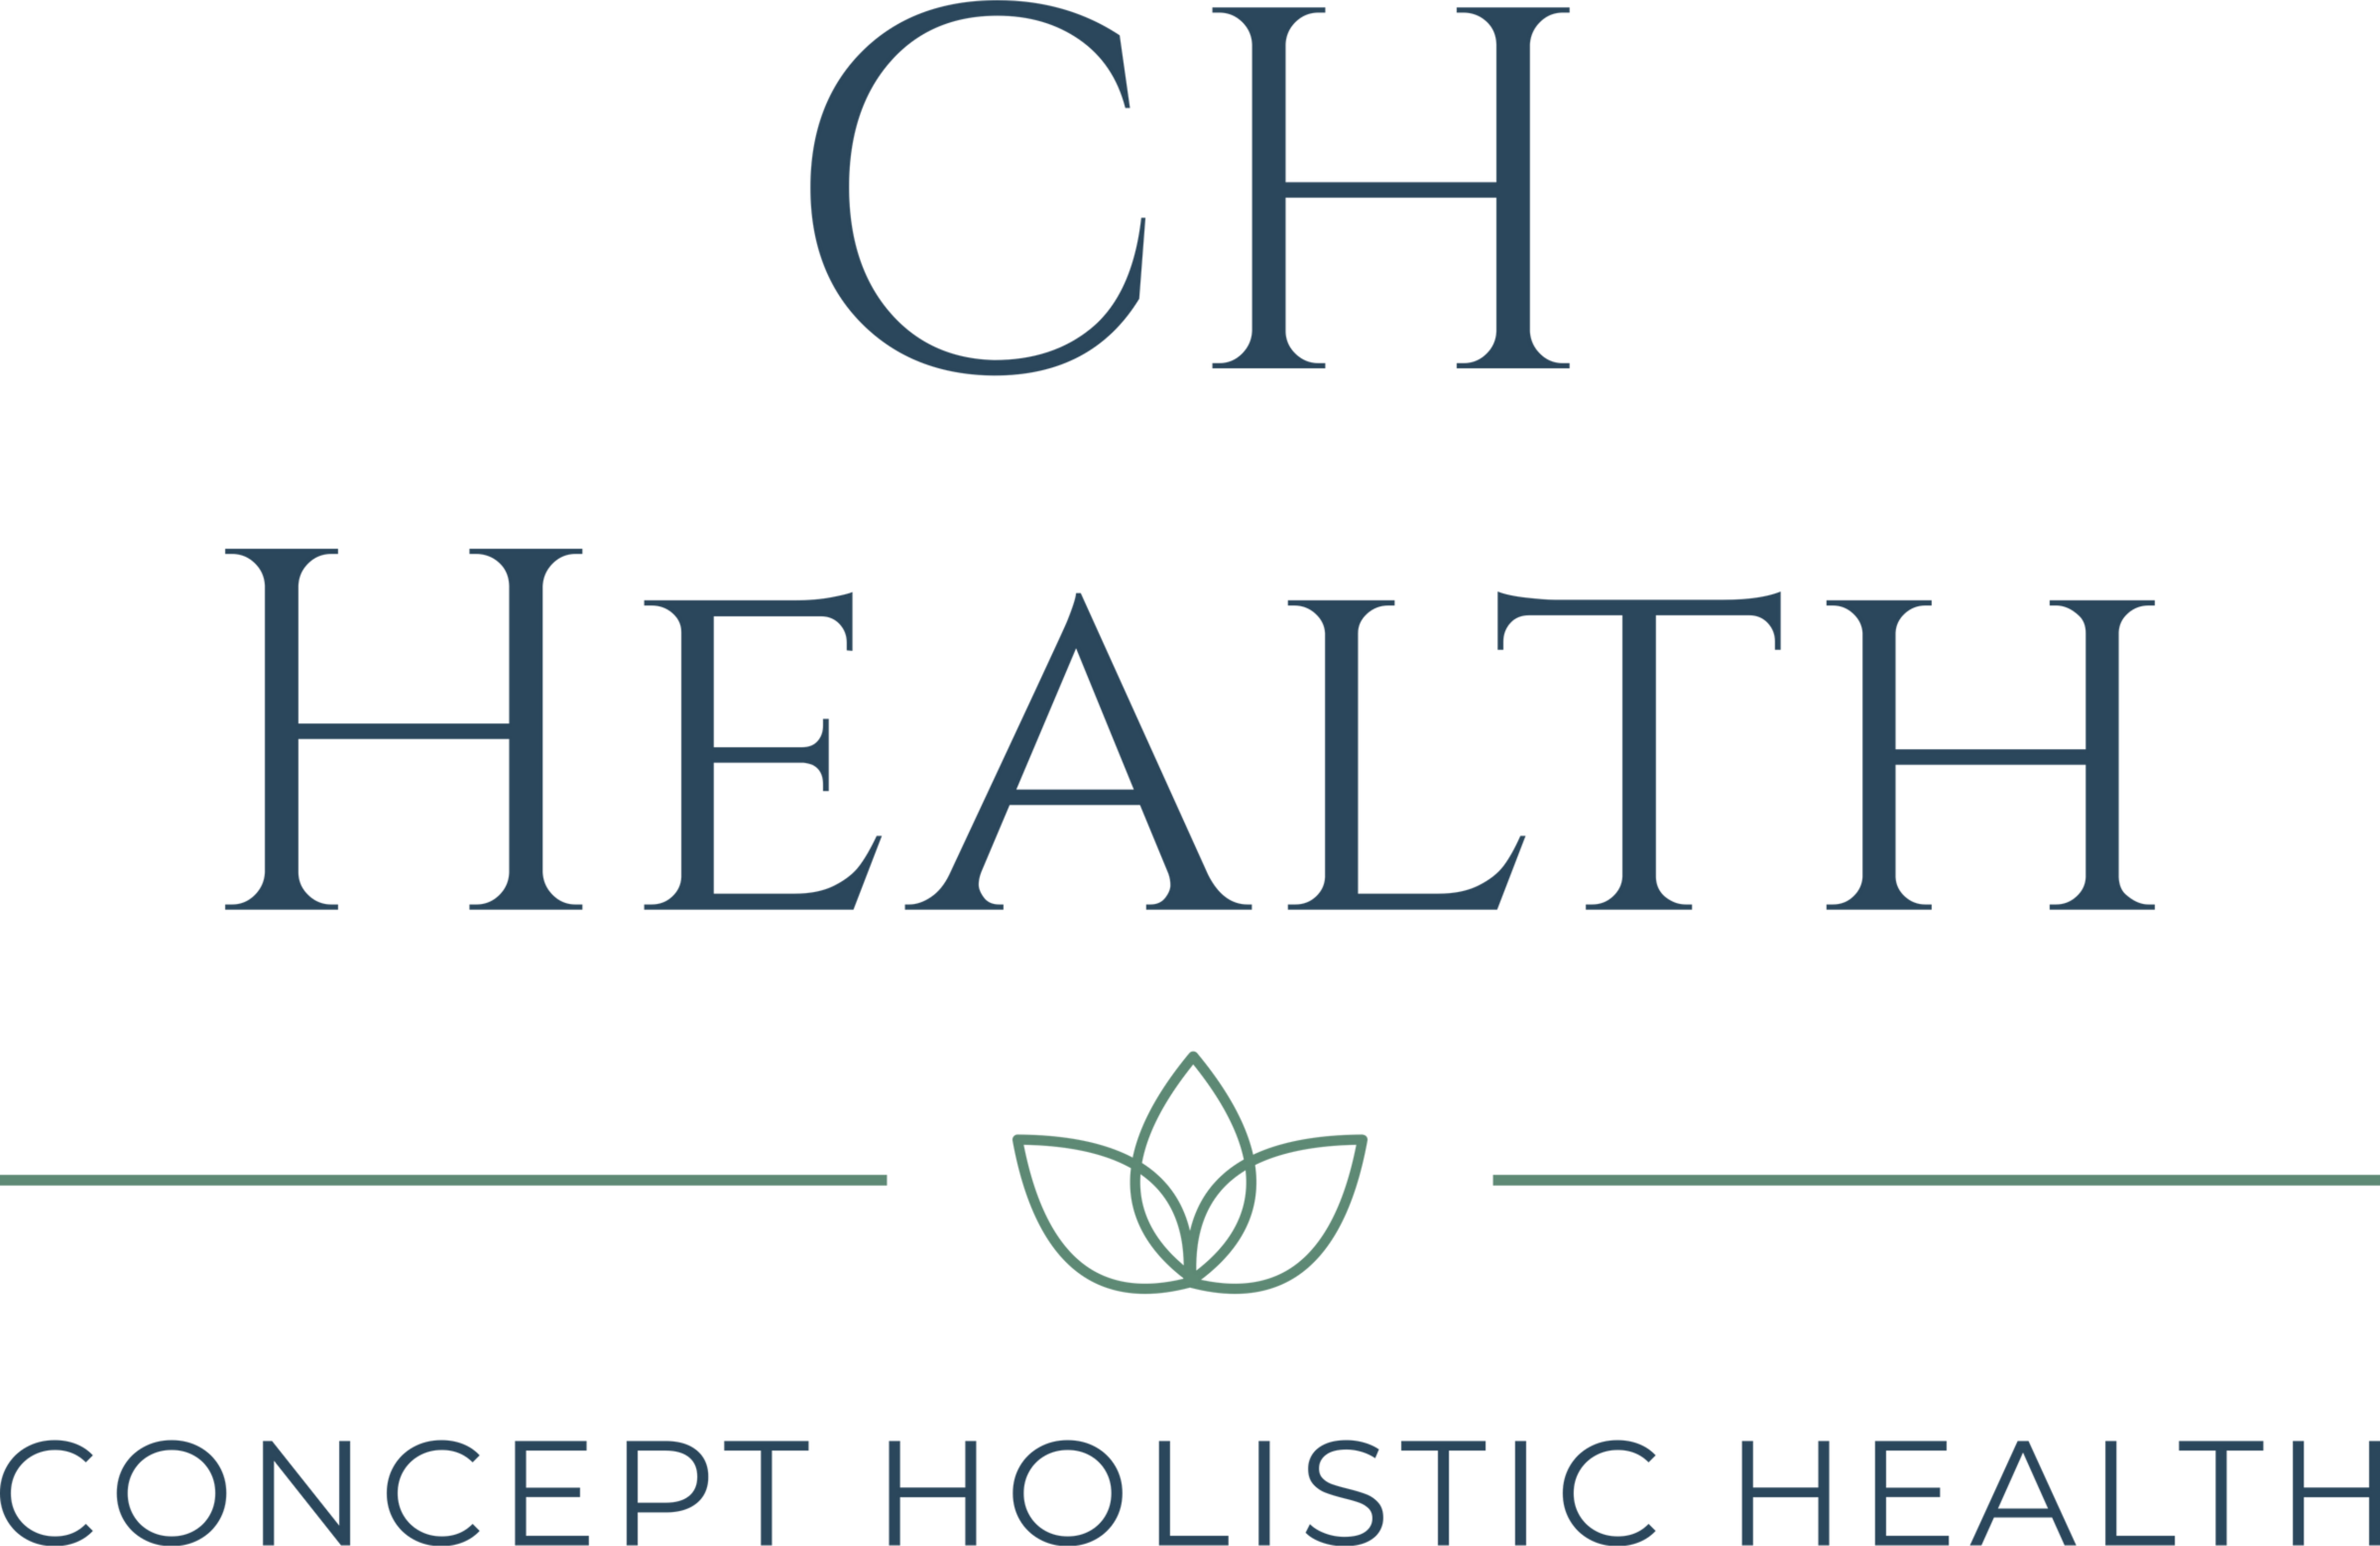 Concept Holistic Health 